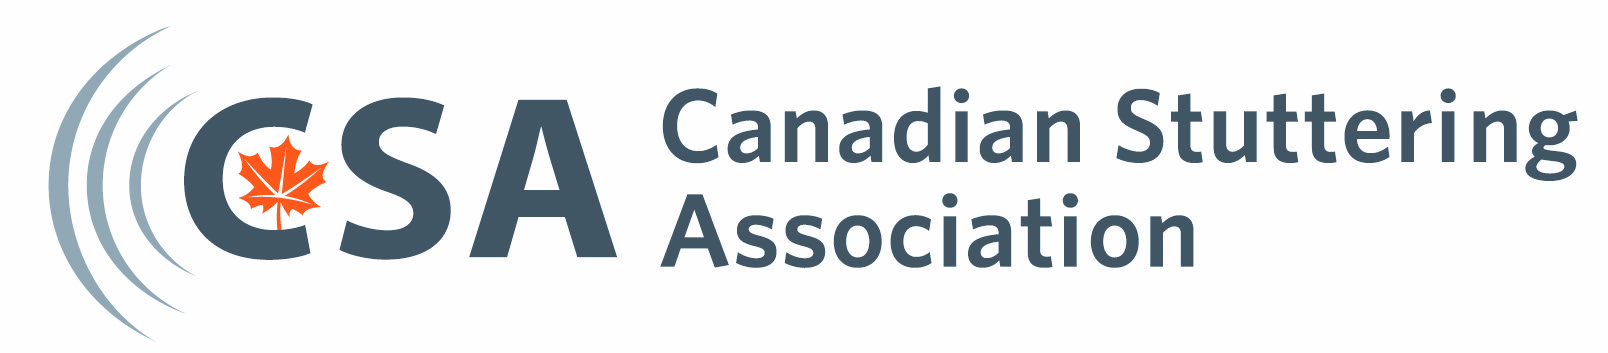 Canadian Stuttering Association